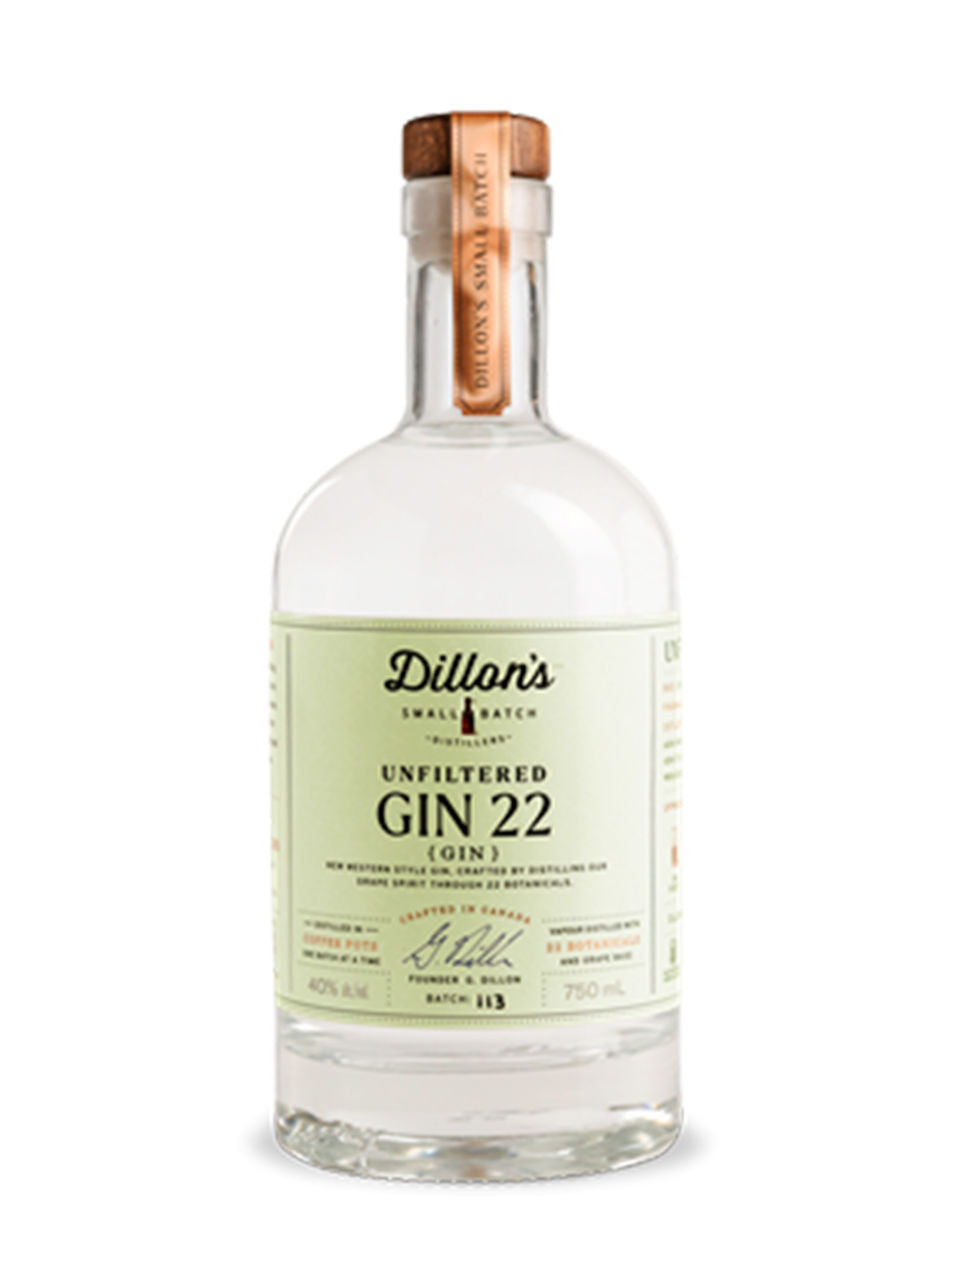 Dillon's Gin 22 Unfiltered 750 mL bottle